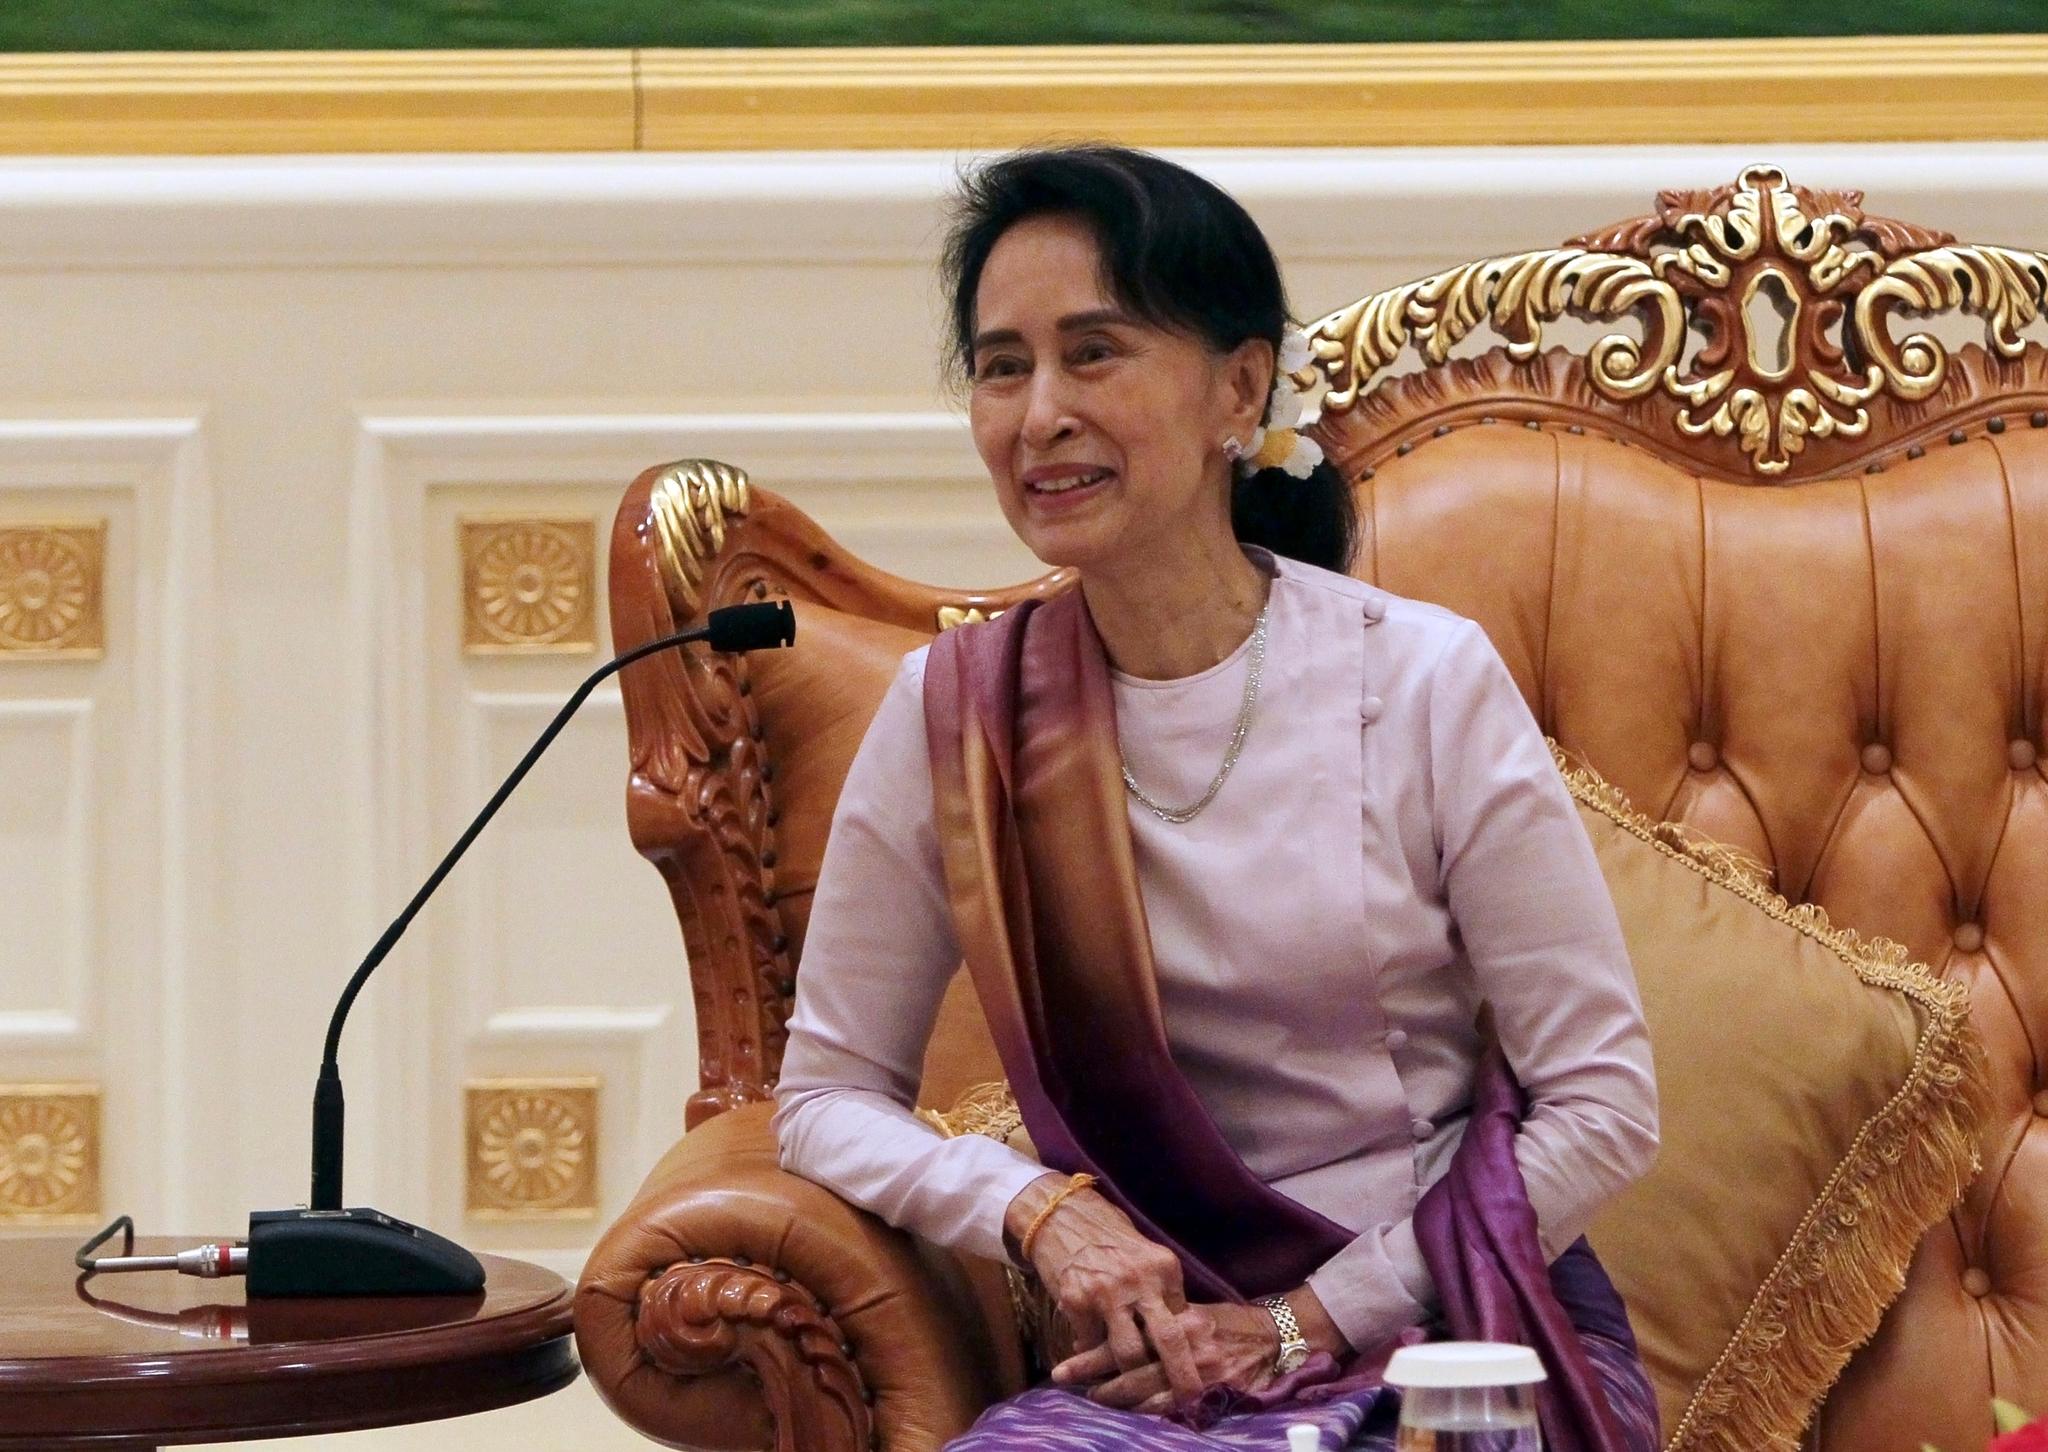 Fredsprisvinner Aung San Suu Kyi skal tale til Myanmars innbyggere tirsdag. I New York følger deltagerne i FNs generalforsamling nøye med.